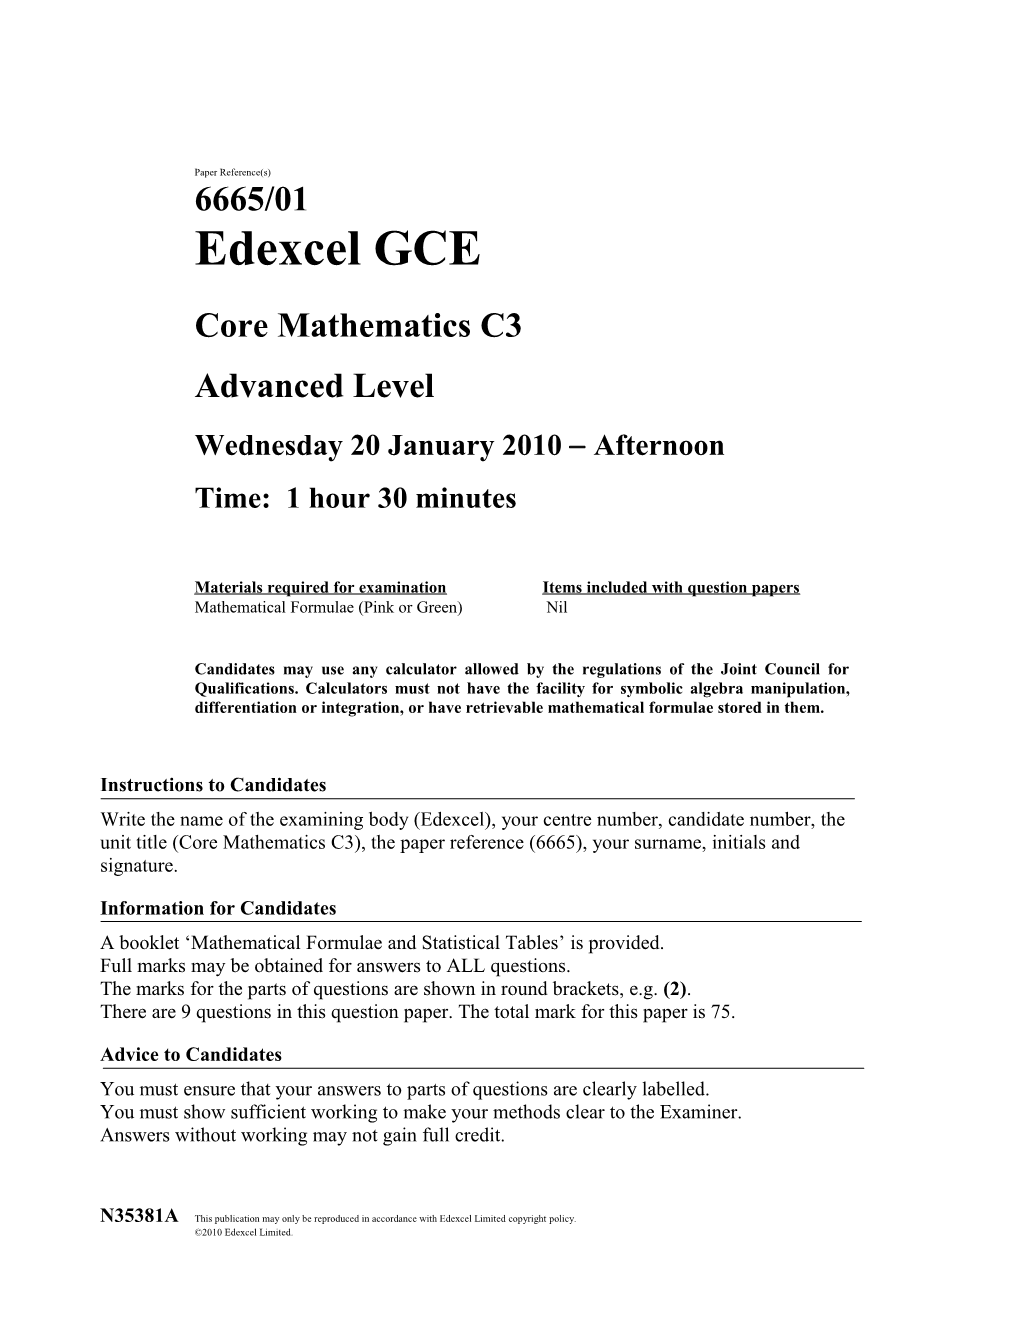 Core Mathematics C3 s1